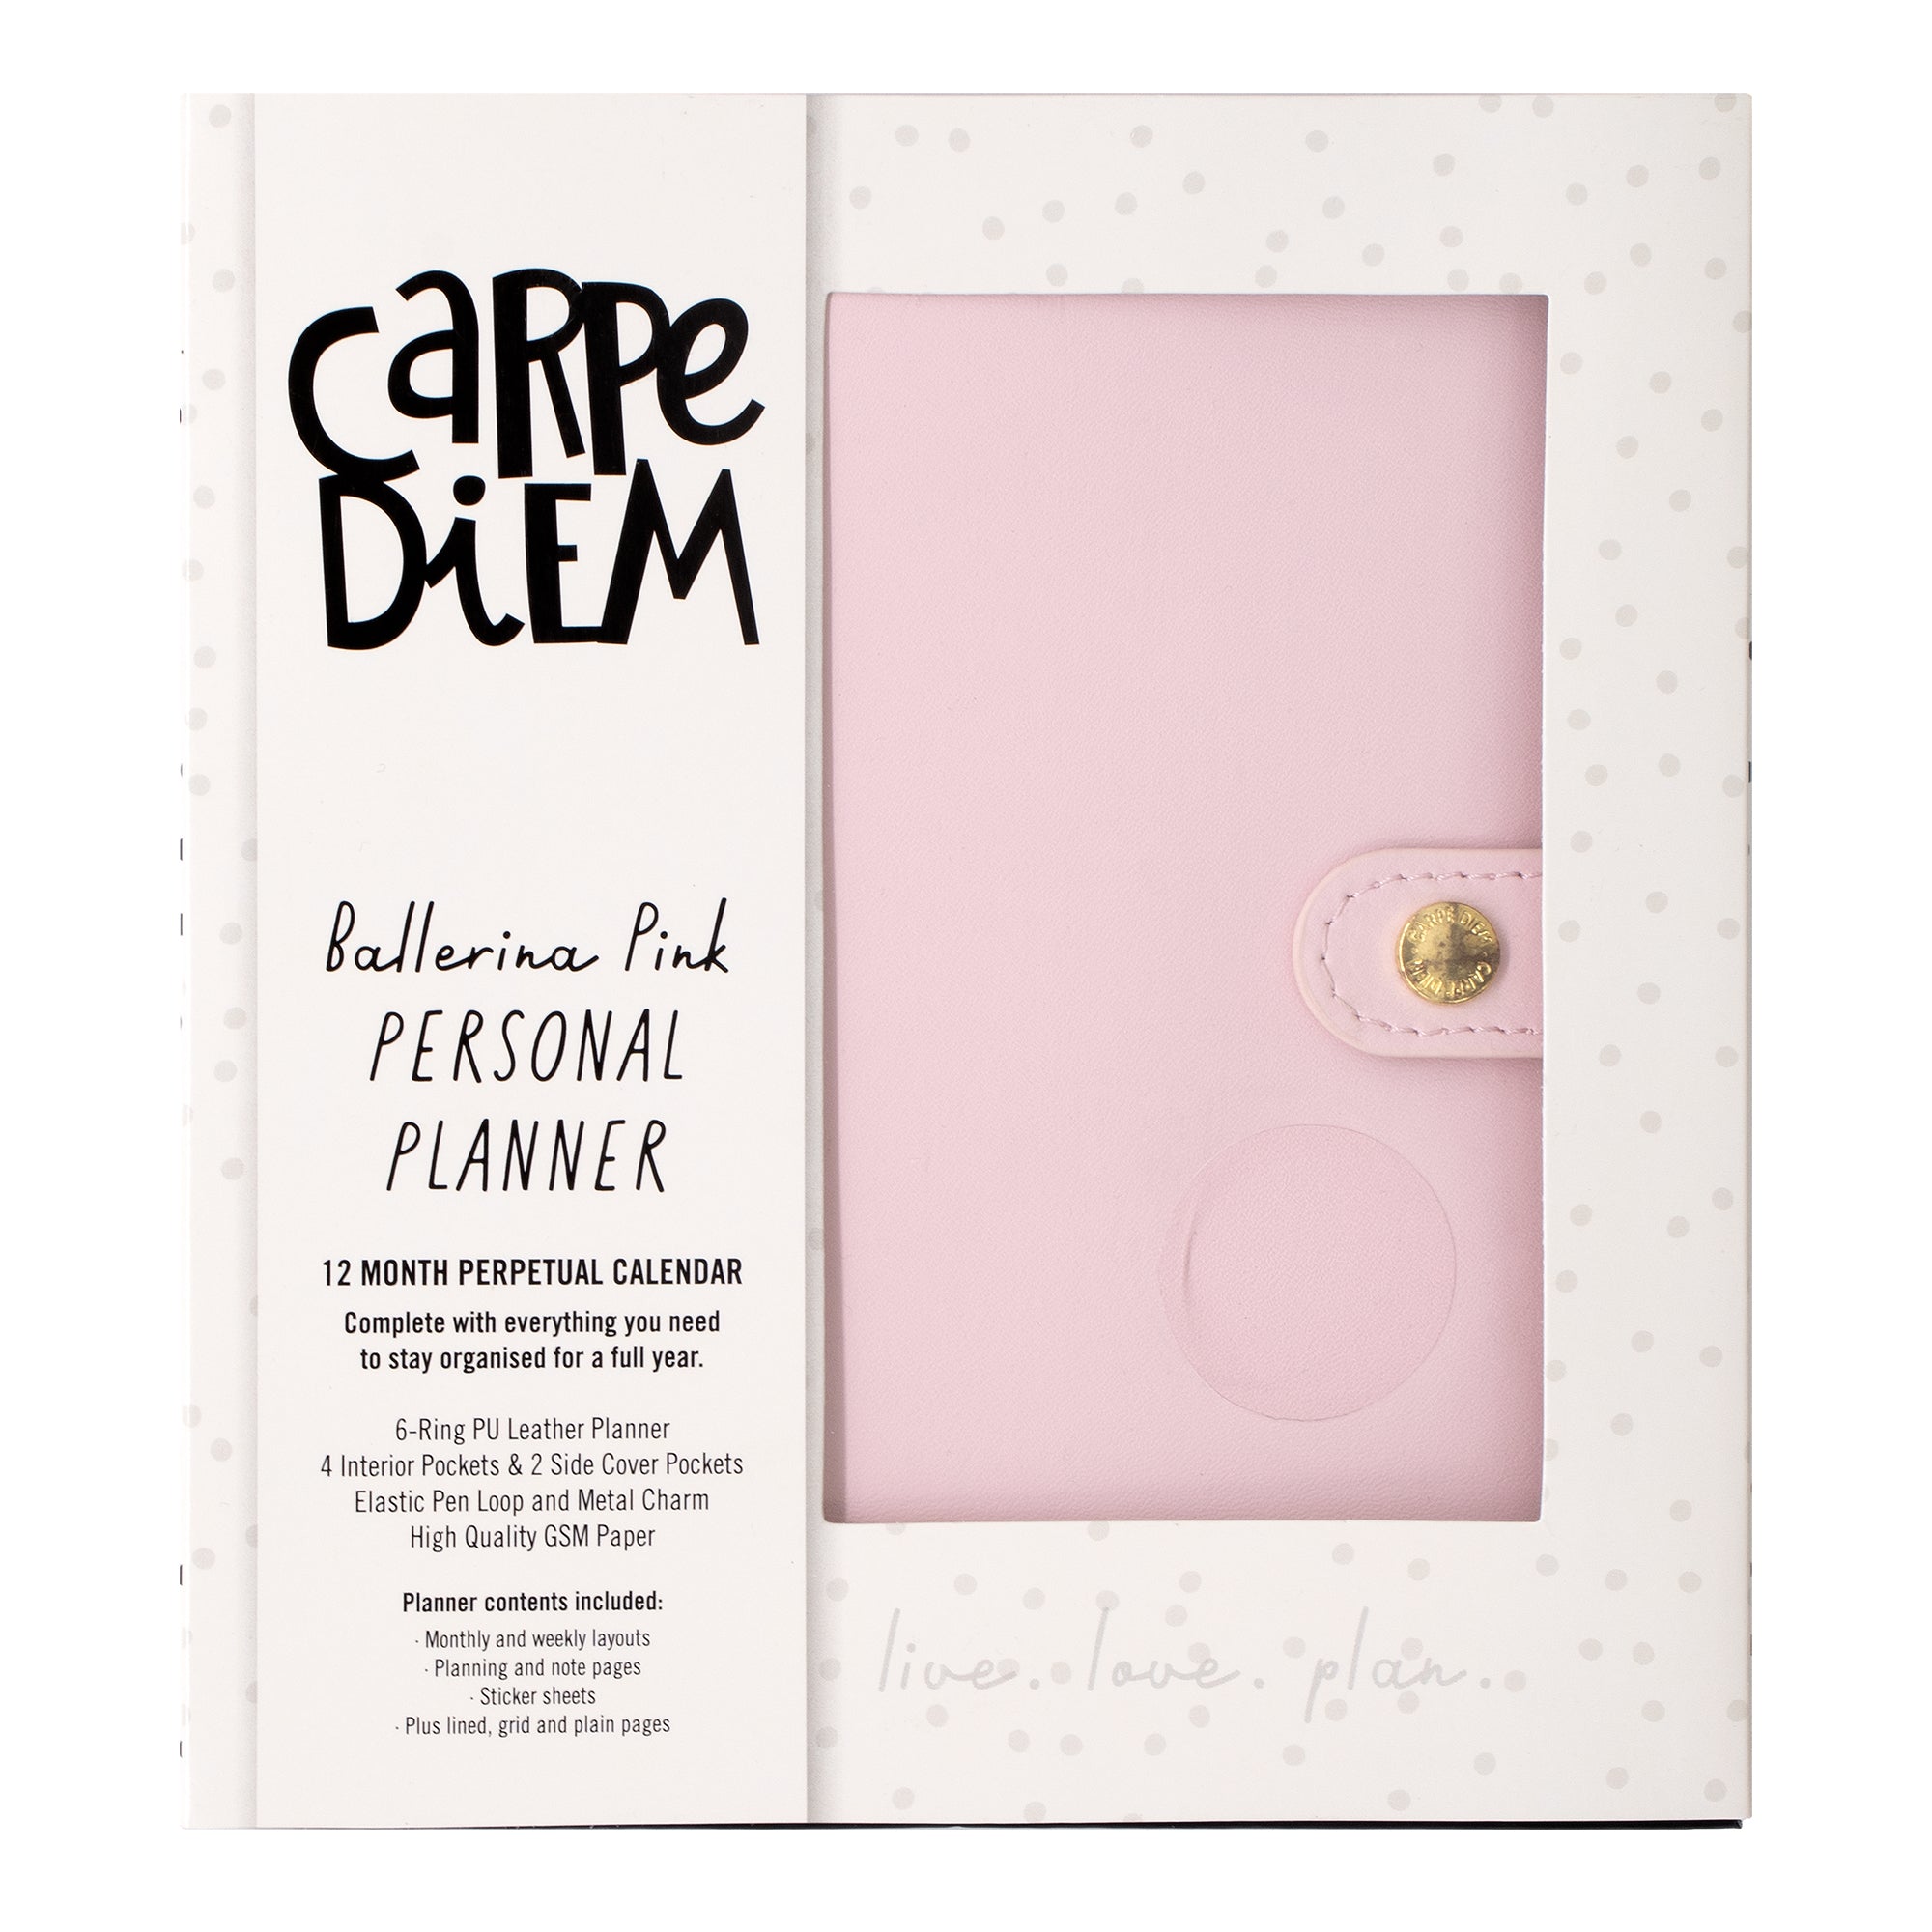 Personal Carpe Diem planner heart - Project Idea 